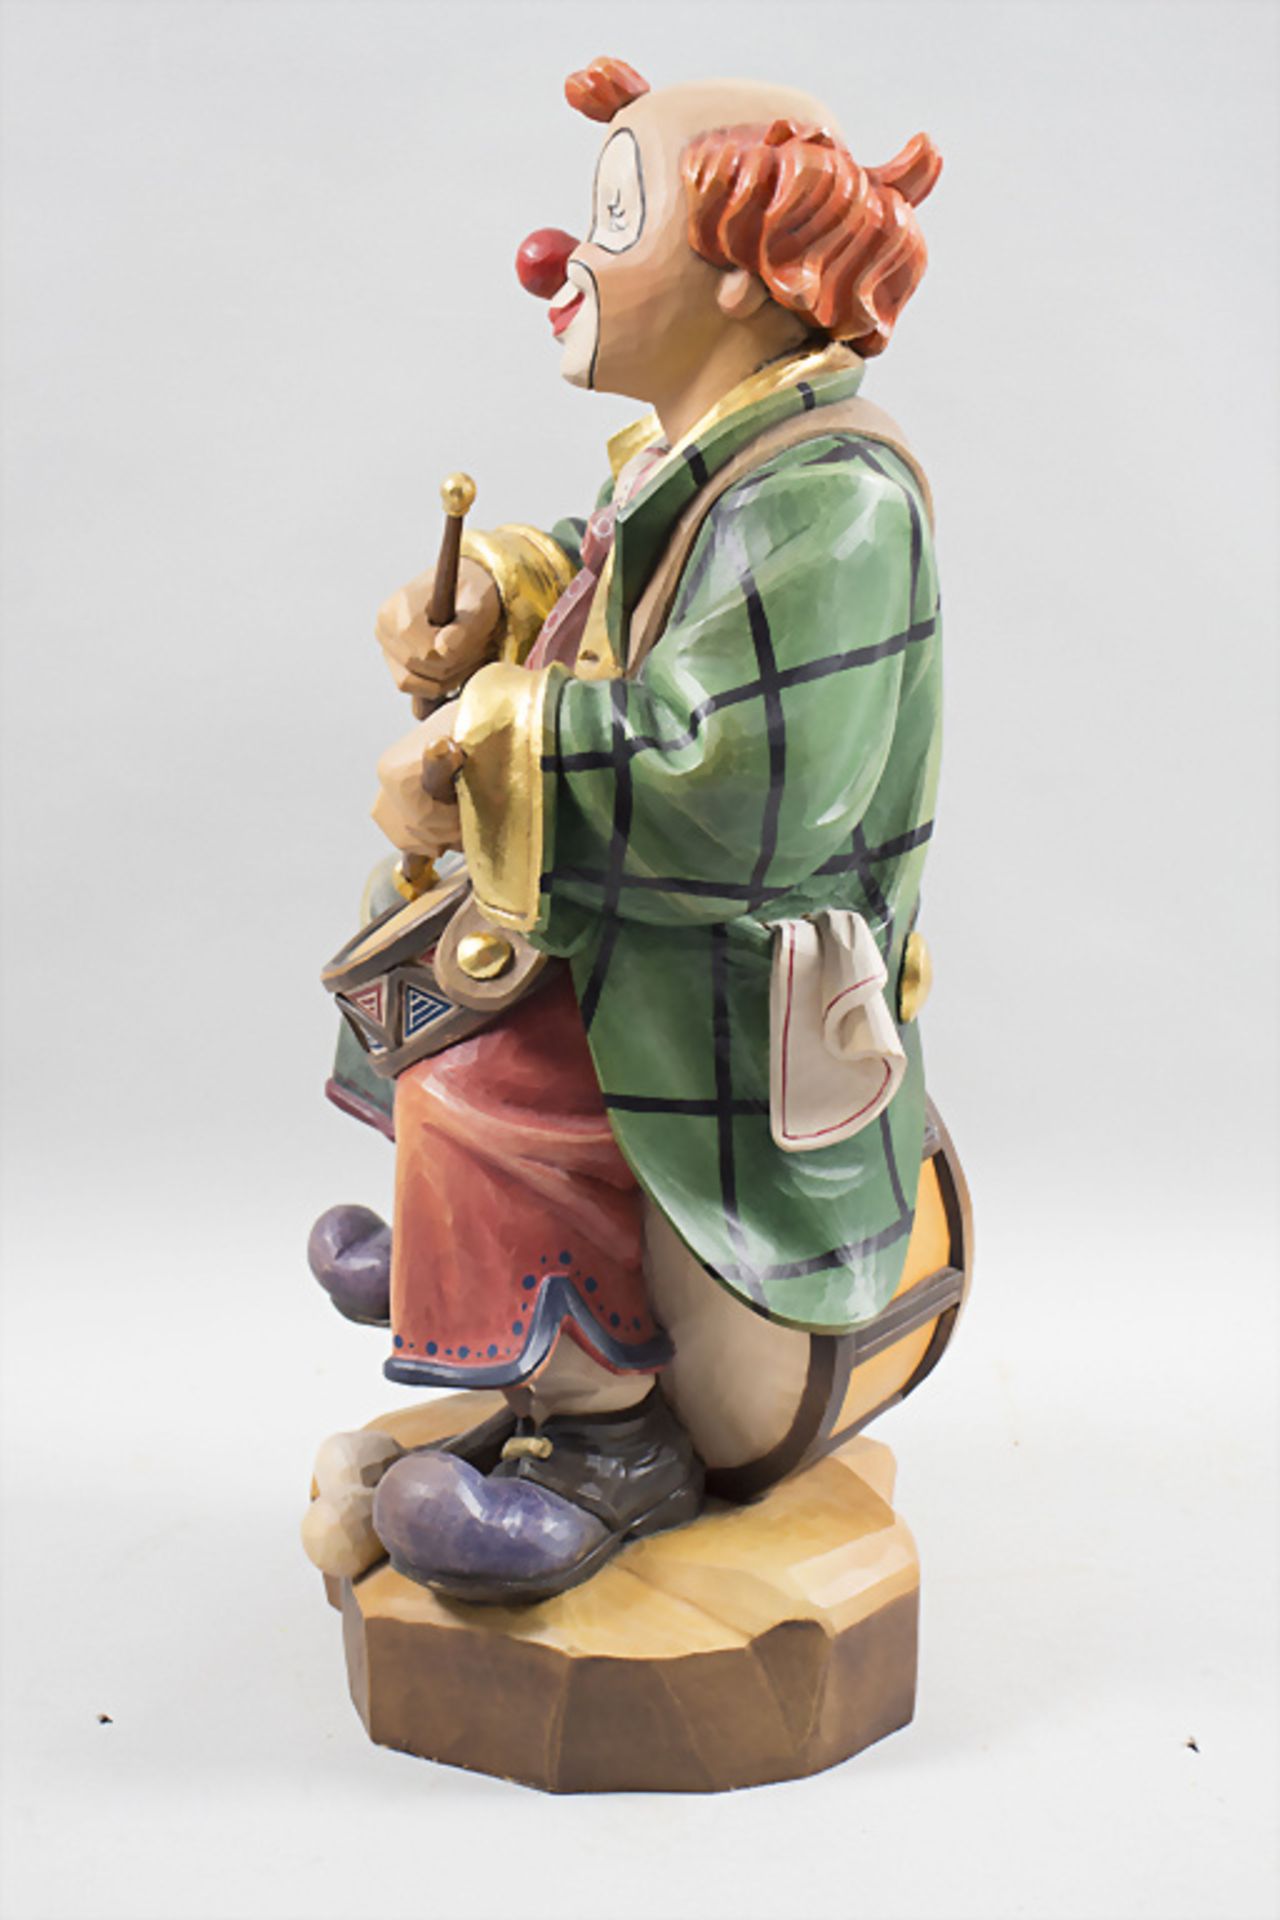 Holzskulptur 'Clown mit Trommel' / A wooden sculpture of a clown with drum, Oswald Dörr, 20. Jh. - Bild 3 aus 6